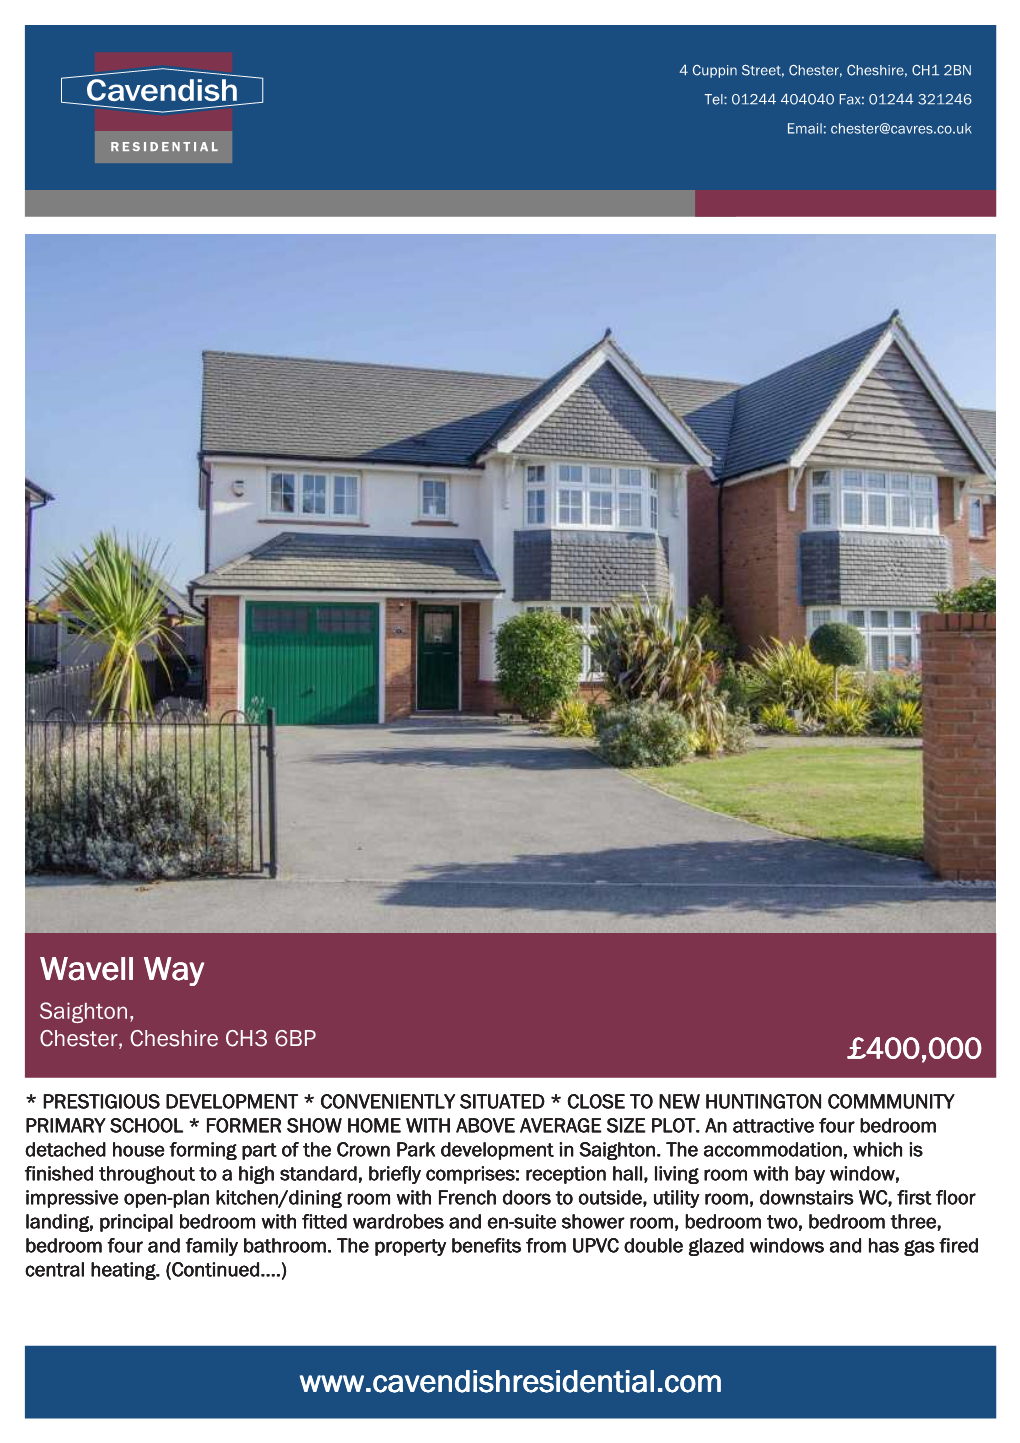 Wavell Way Saighton, Chester, Cheshire CH3 6BP £400,000